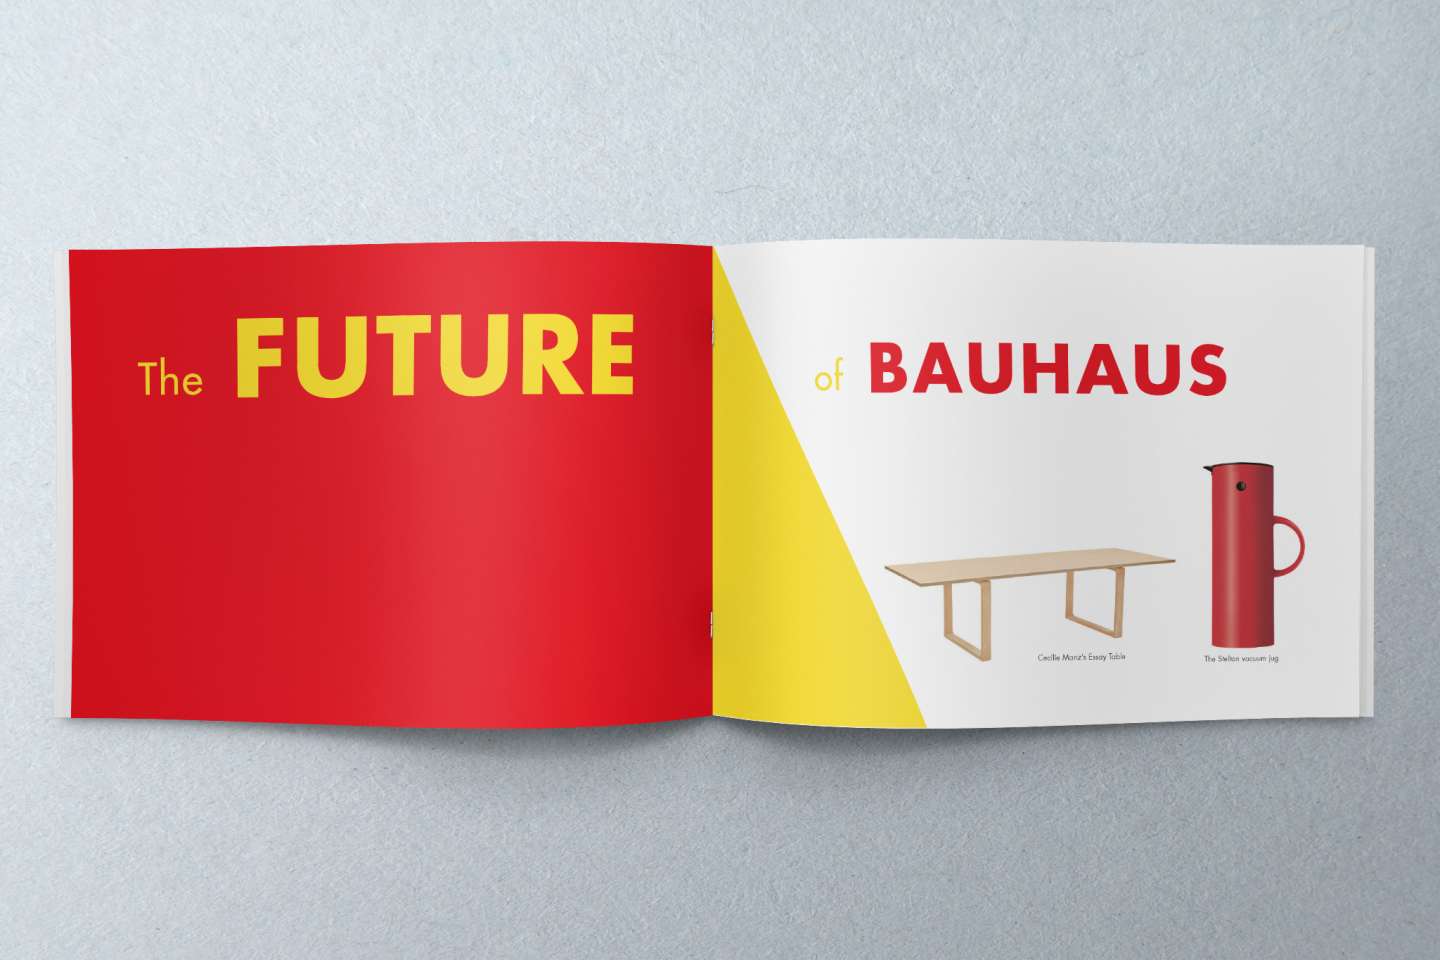 Futura X Bauhaus